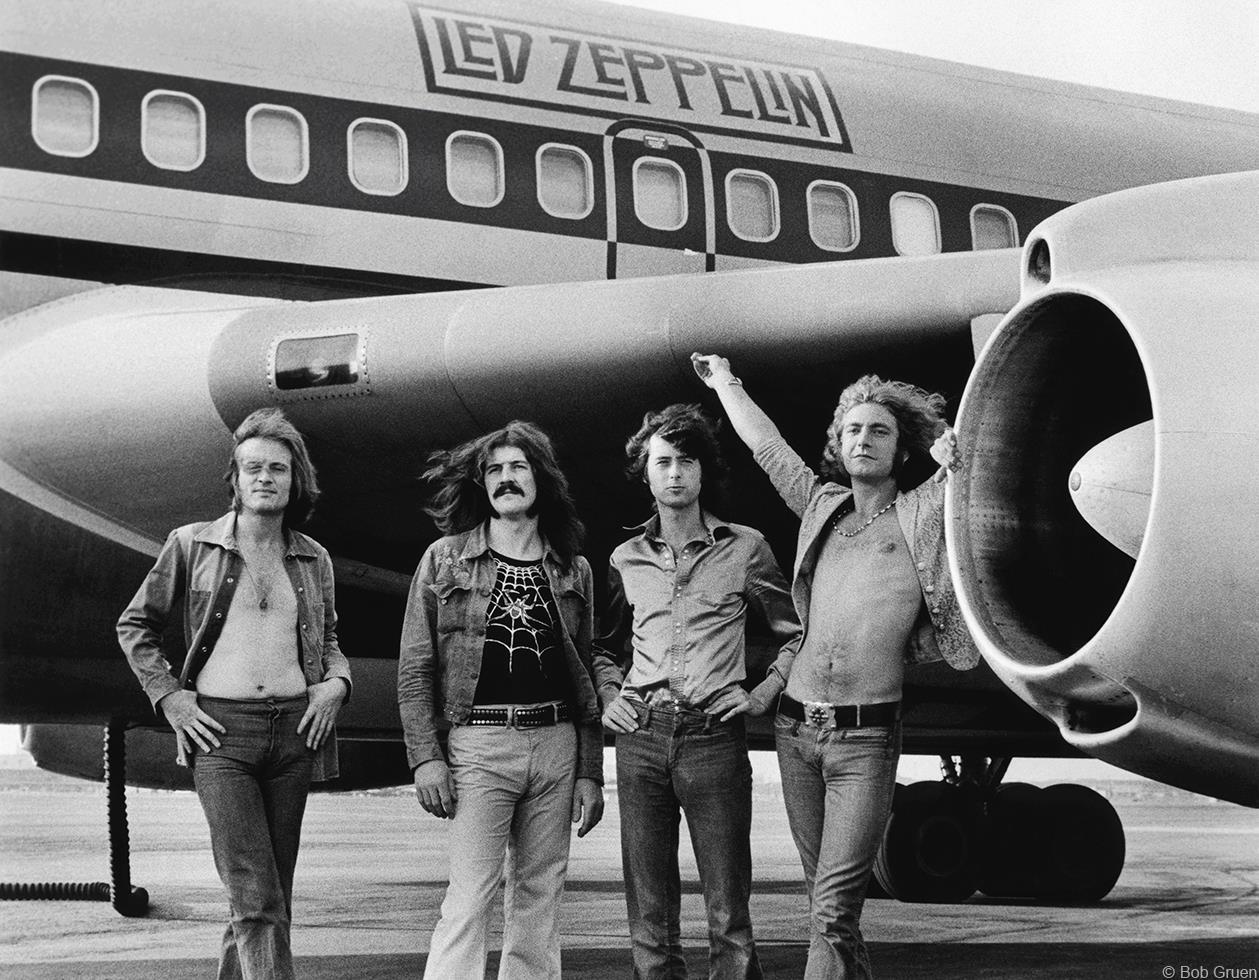 Bob Gruen Black and White Photograph – Led Zeppelin "Flugzeug"